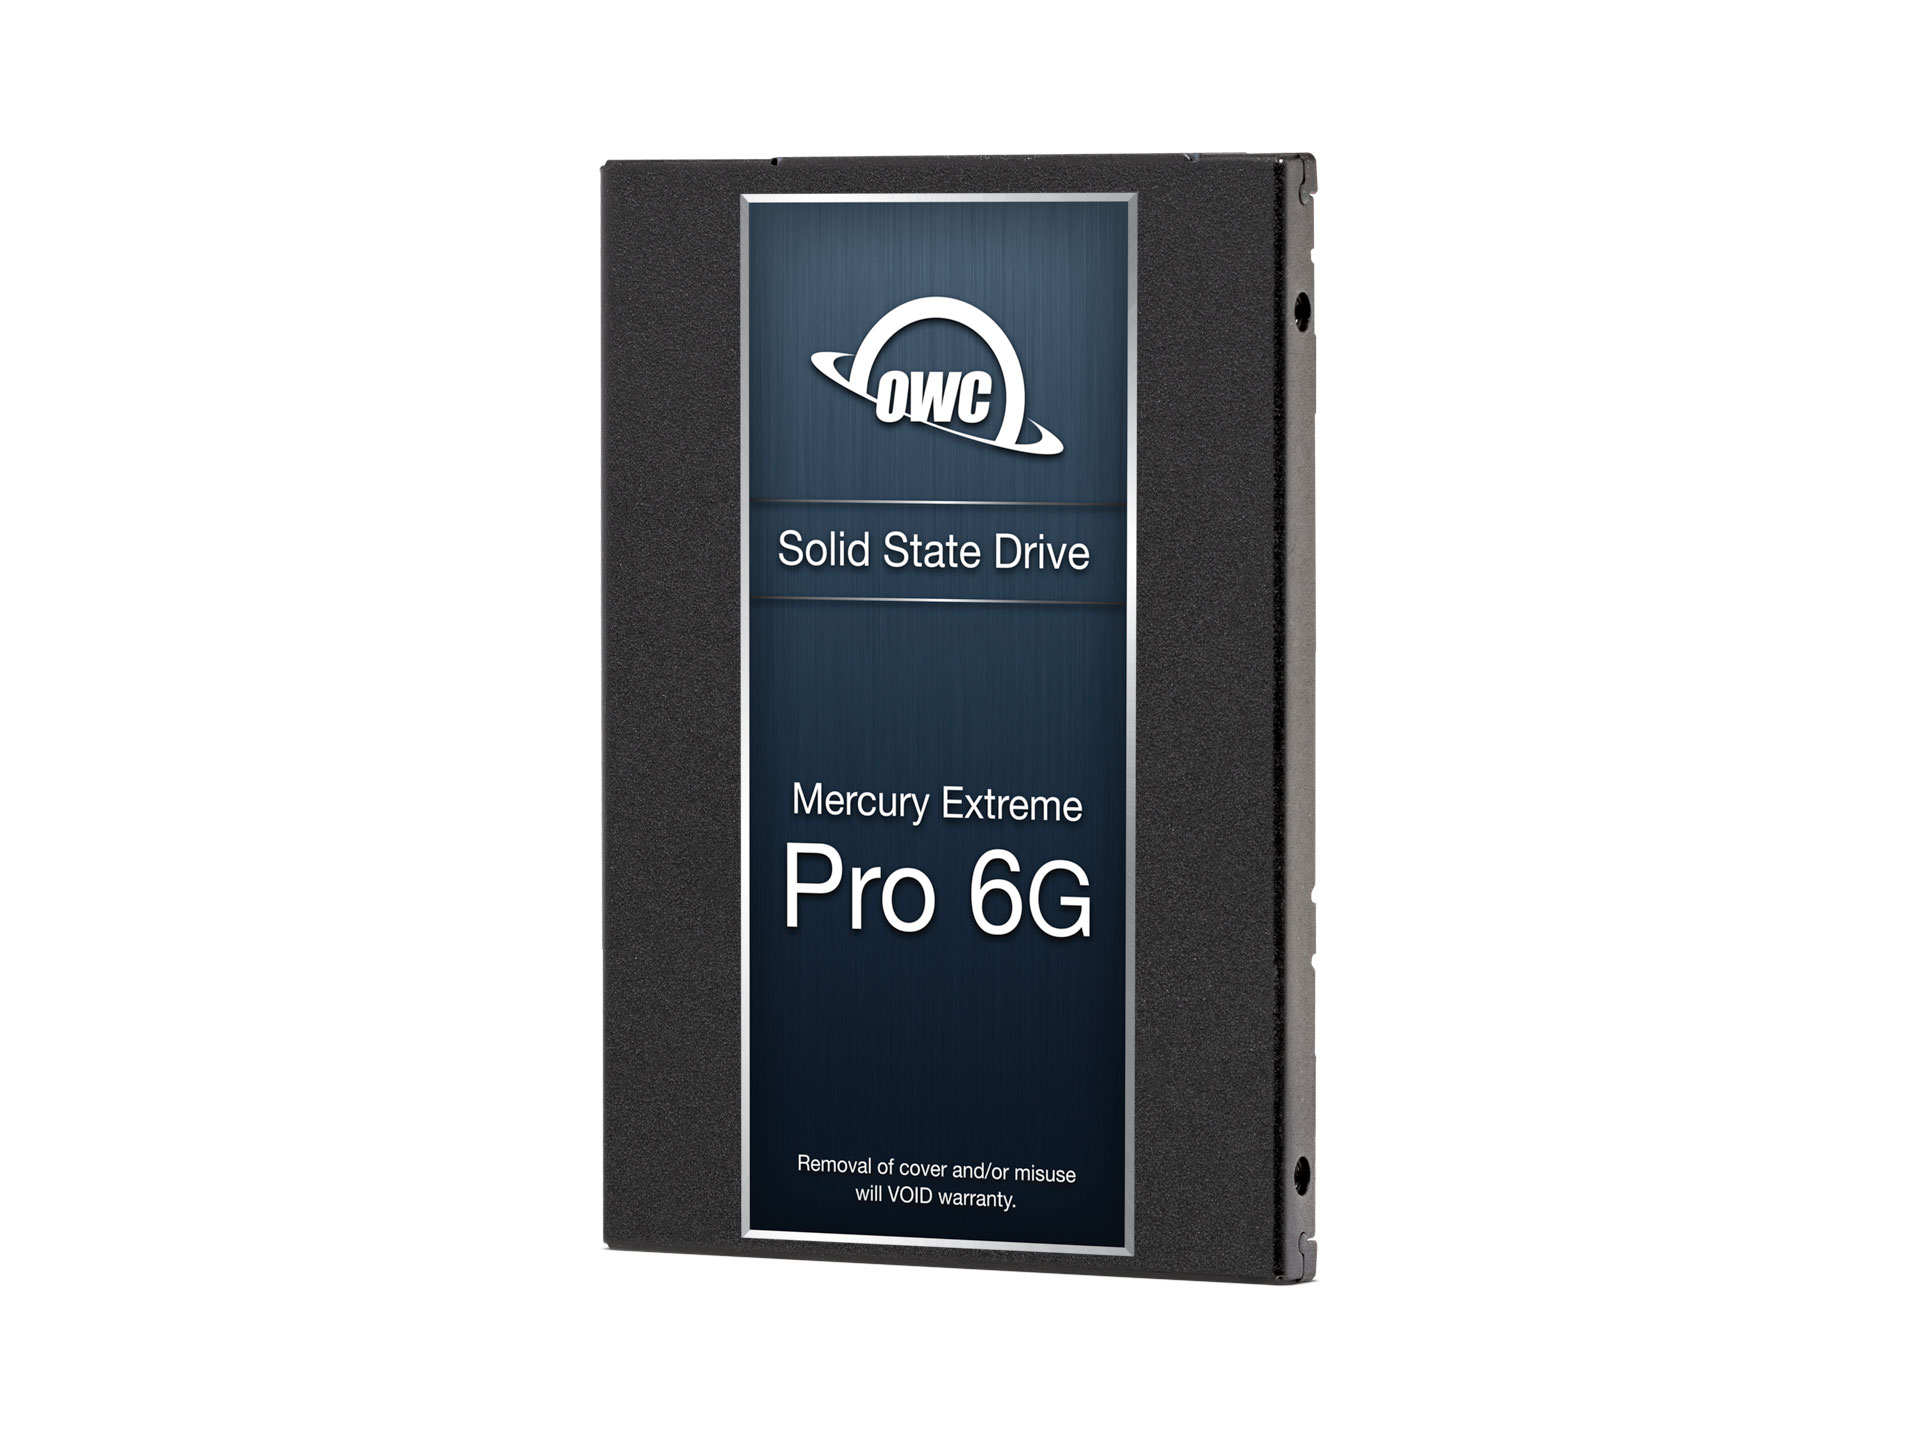 OWC Mercury Extreme Pro 6G SSD | OWC Asia